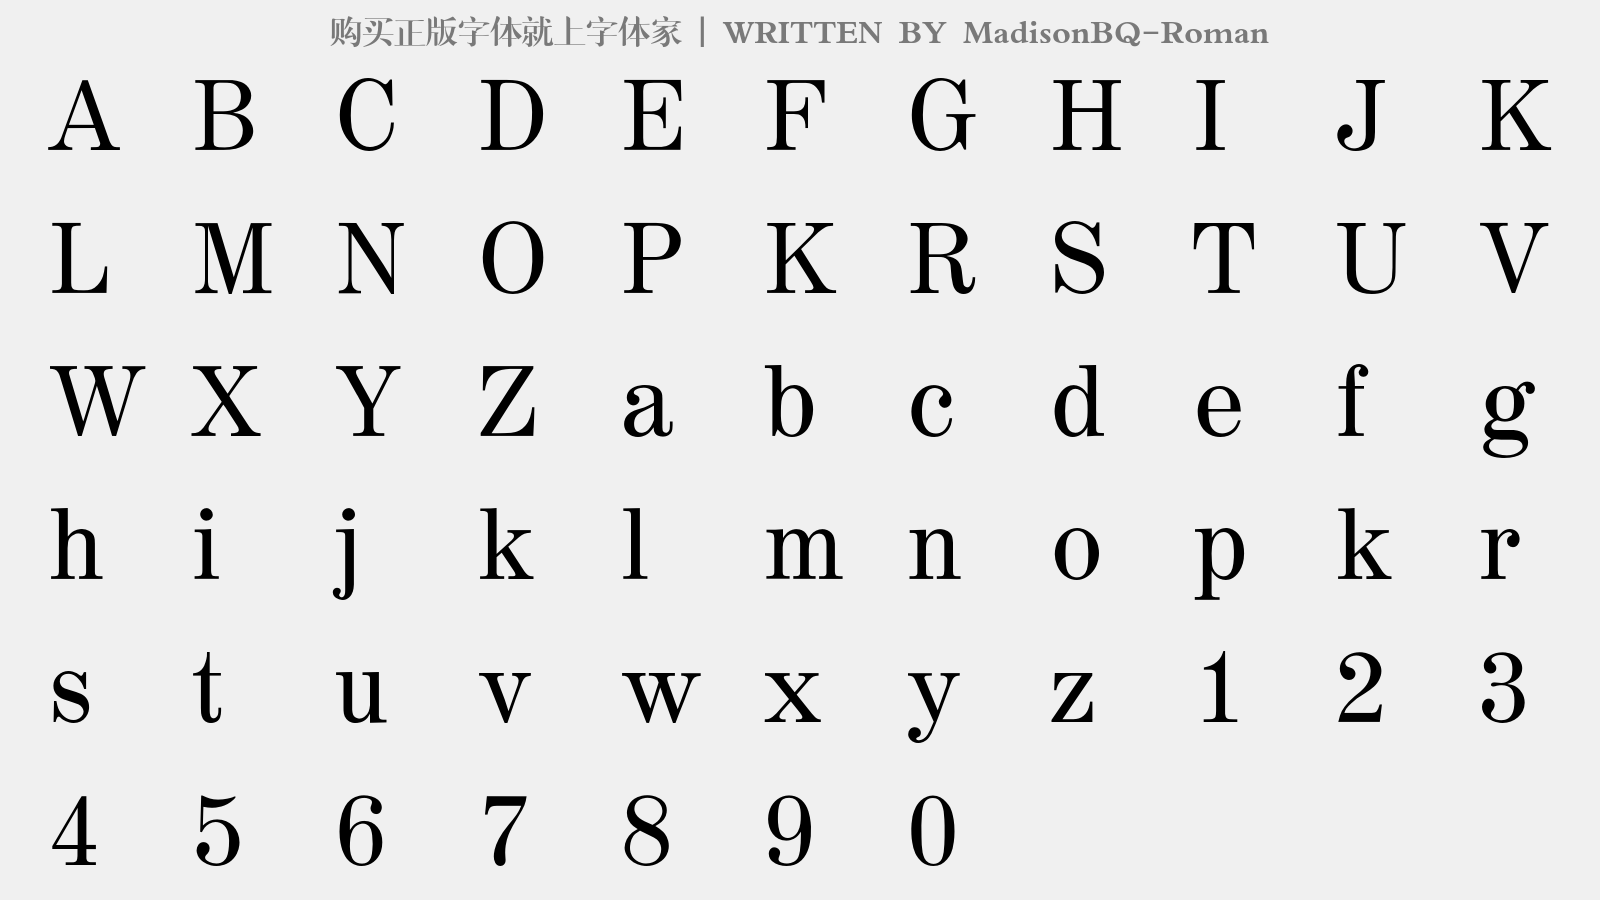 MadisonBQ-Roman - 大写字母/小写字母/数字